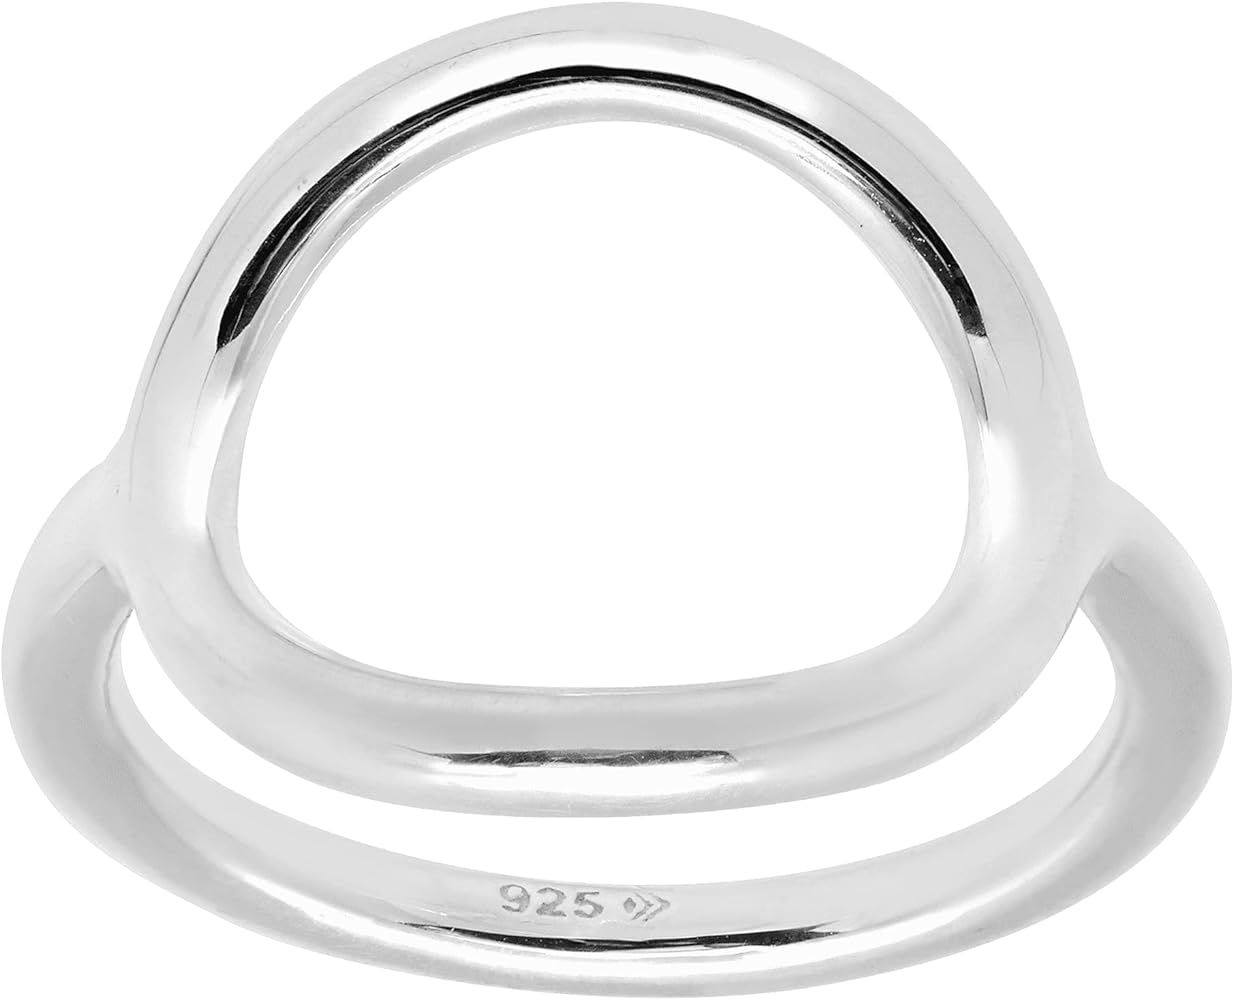 Silpada 'Karma' Ring in Sterling Silver | Amazon (US)